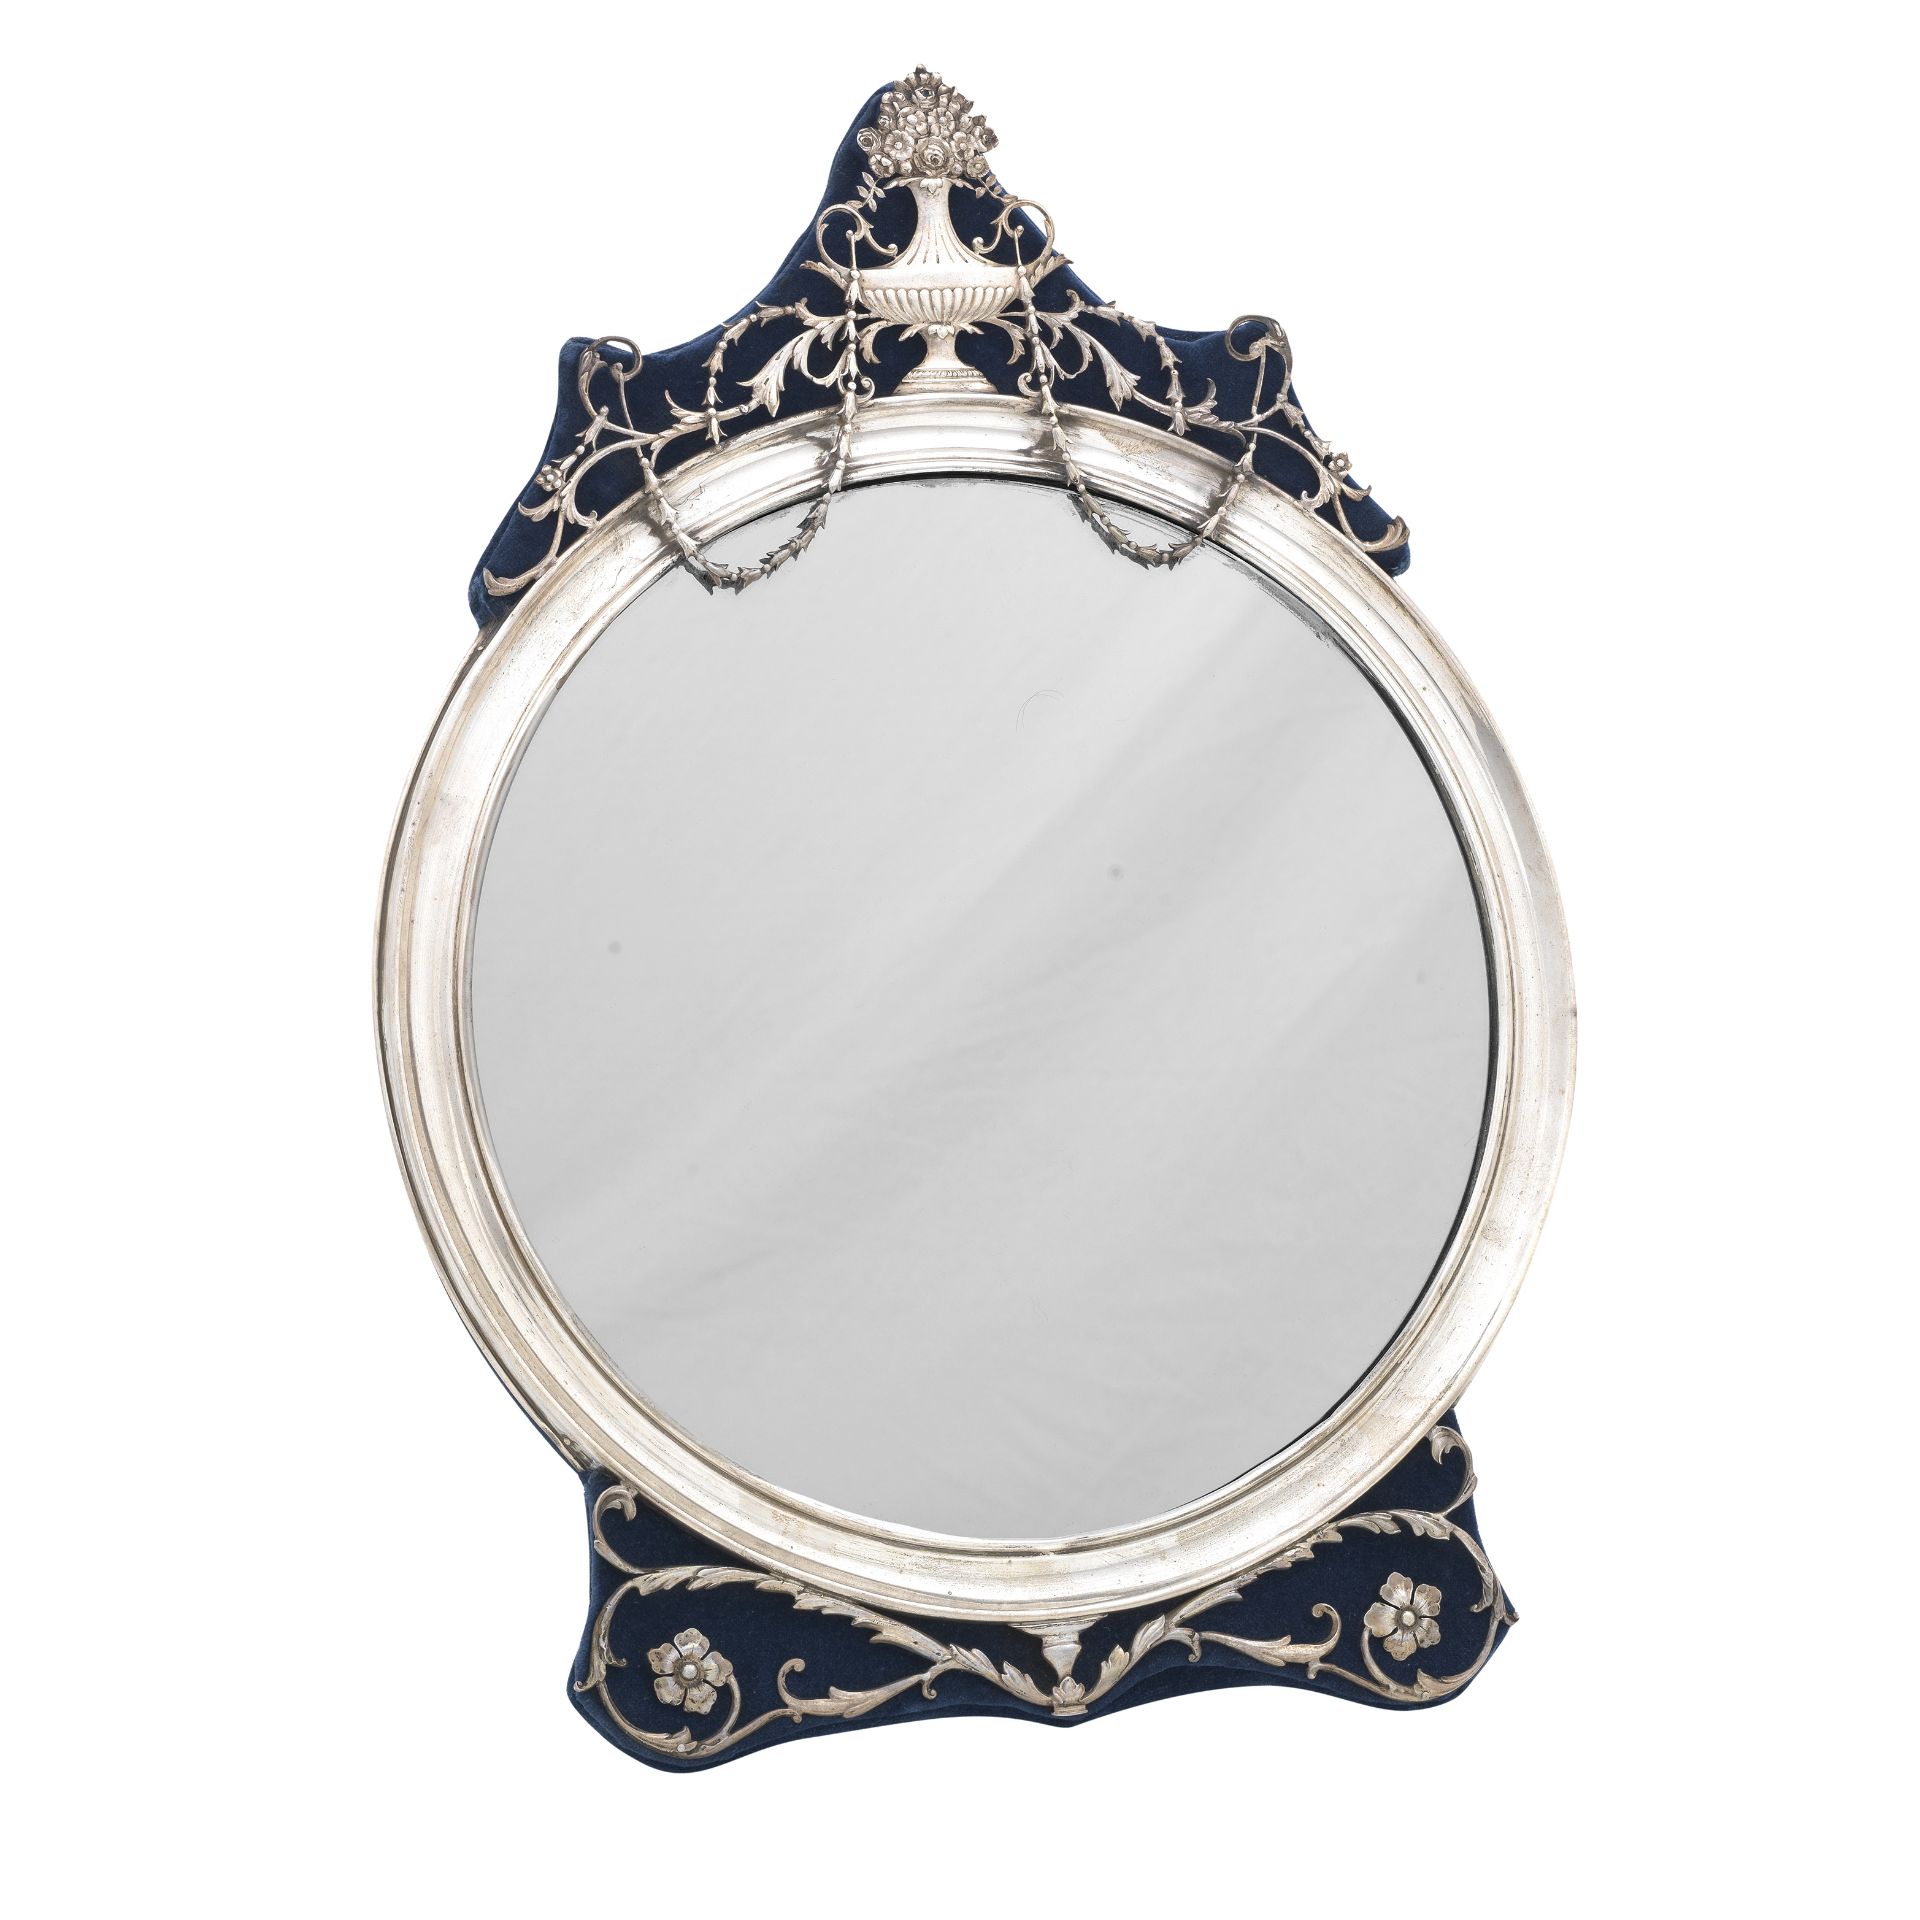 An edwardian silver dressing table mirror maker's mark unclear, London, 1909